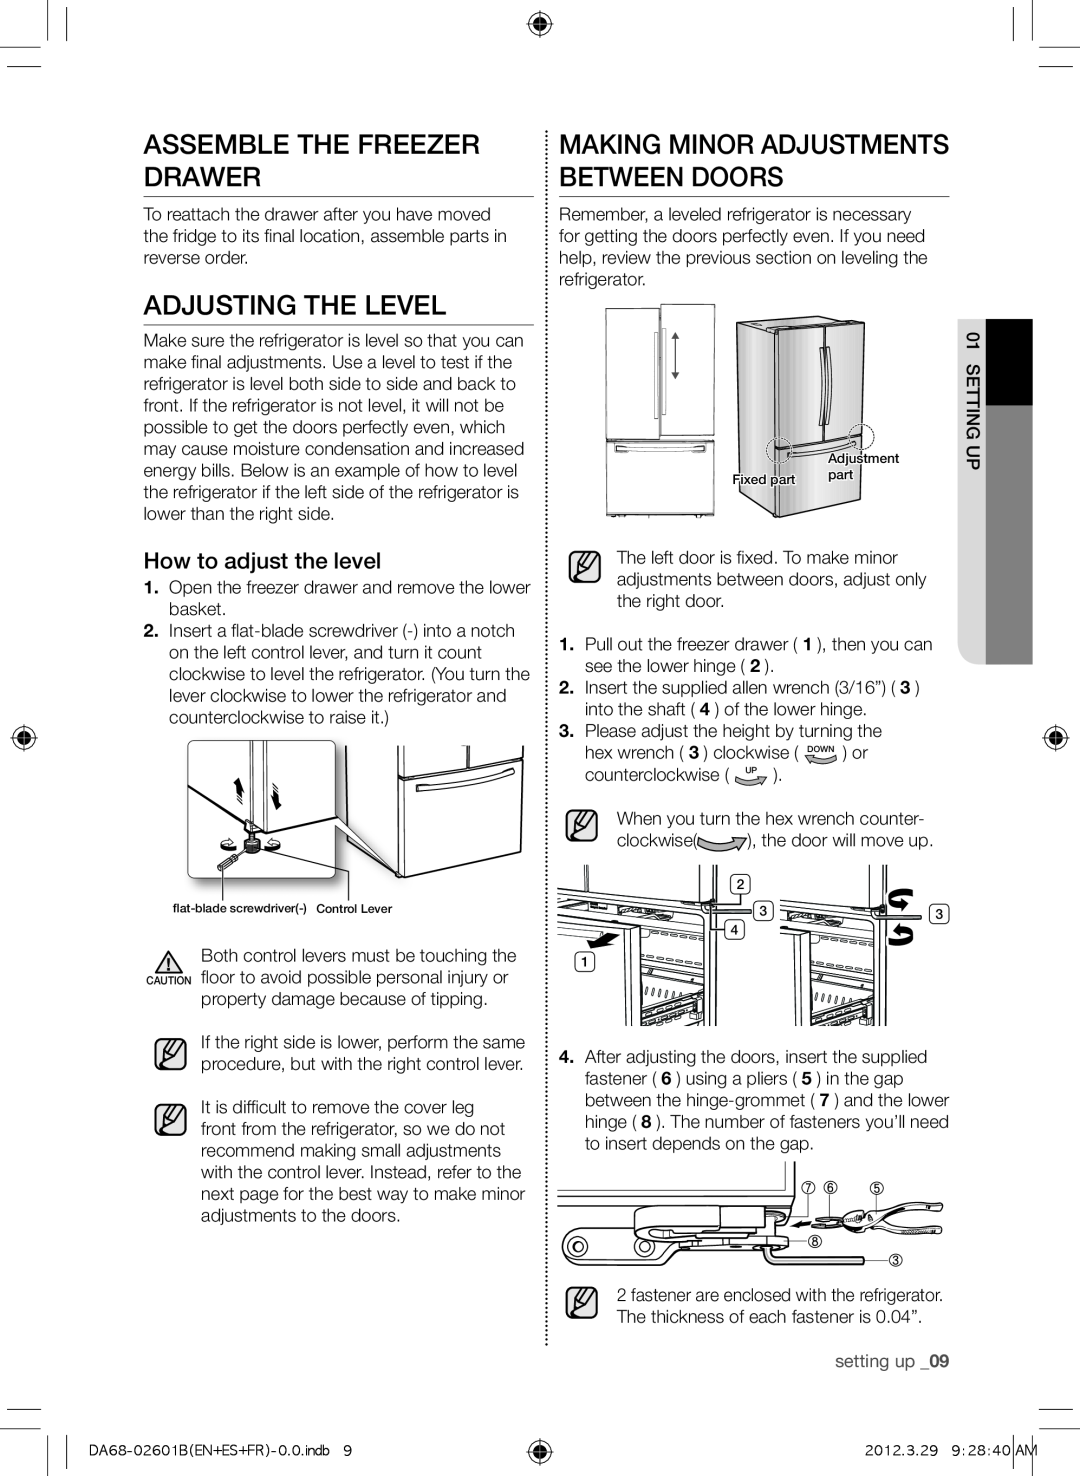 Samsung RF261BEAEWW, GI6FARXXQ Assemble the freezer drawer, Adjusting the Level, Making minor adjustments between doors 